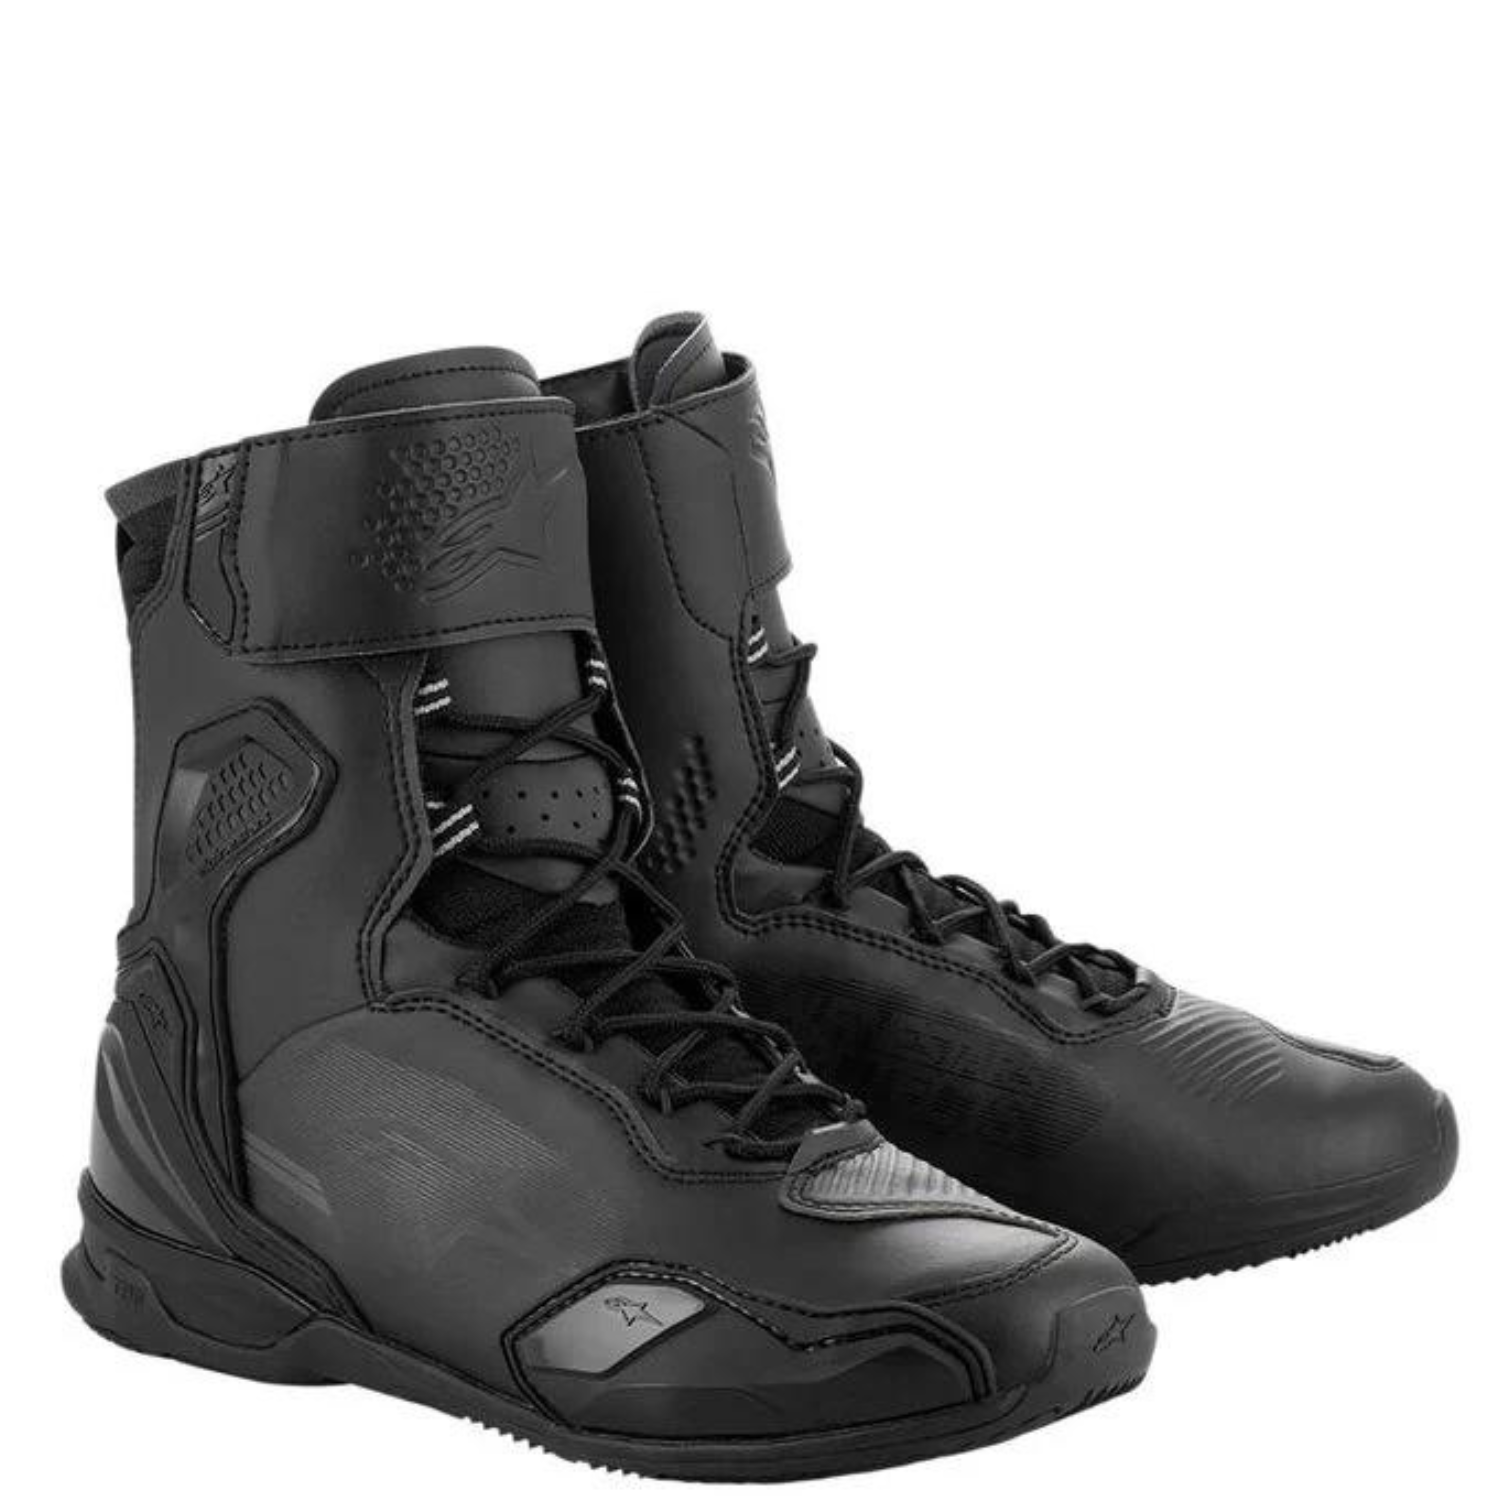 Image of Alpinestars Superfaster Shoes Black Size US 10 ID 8059347260655